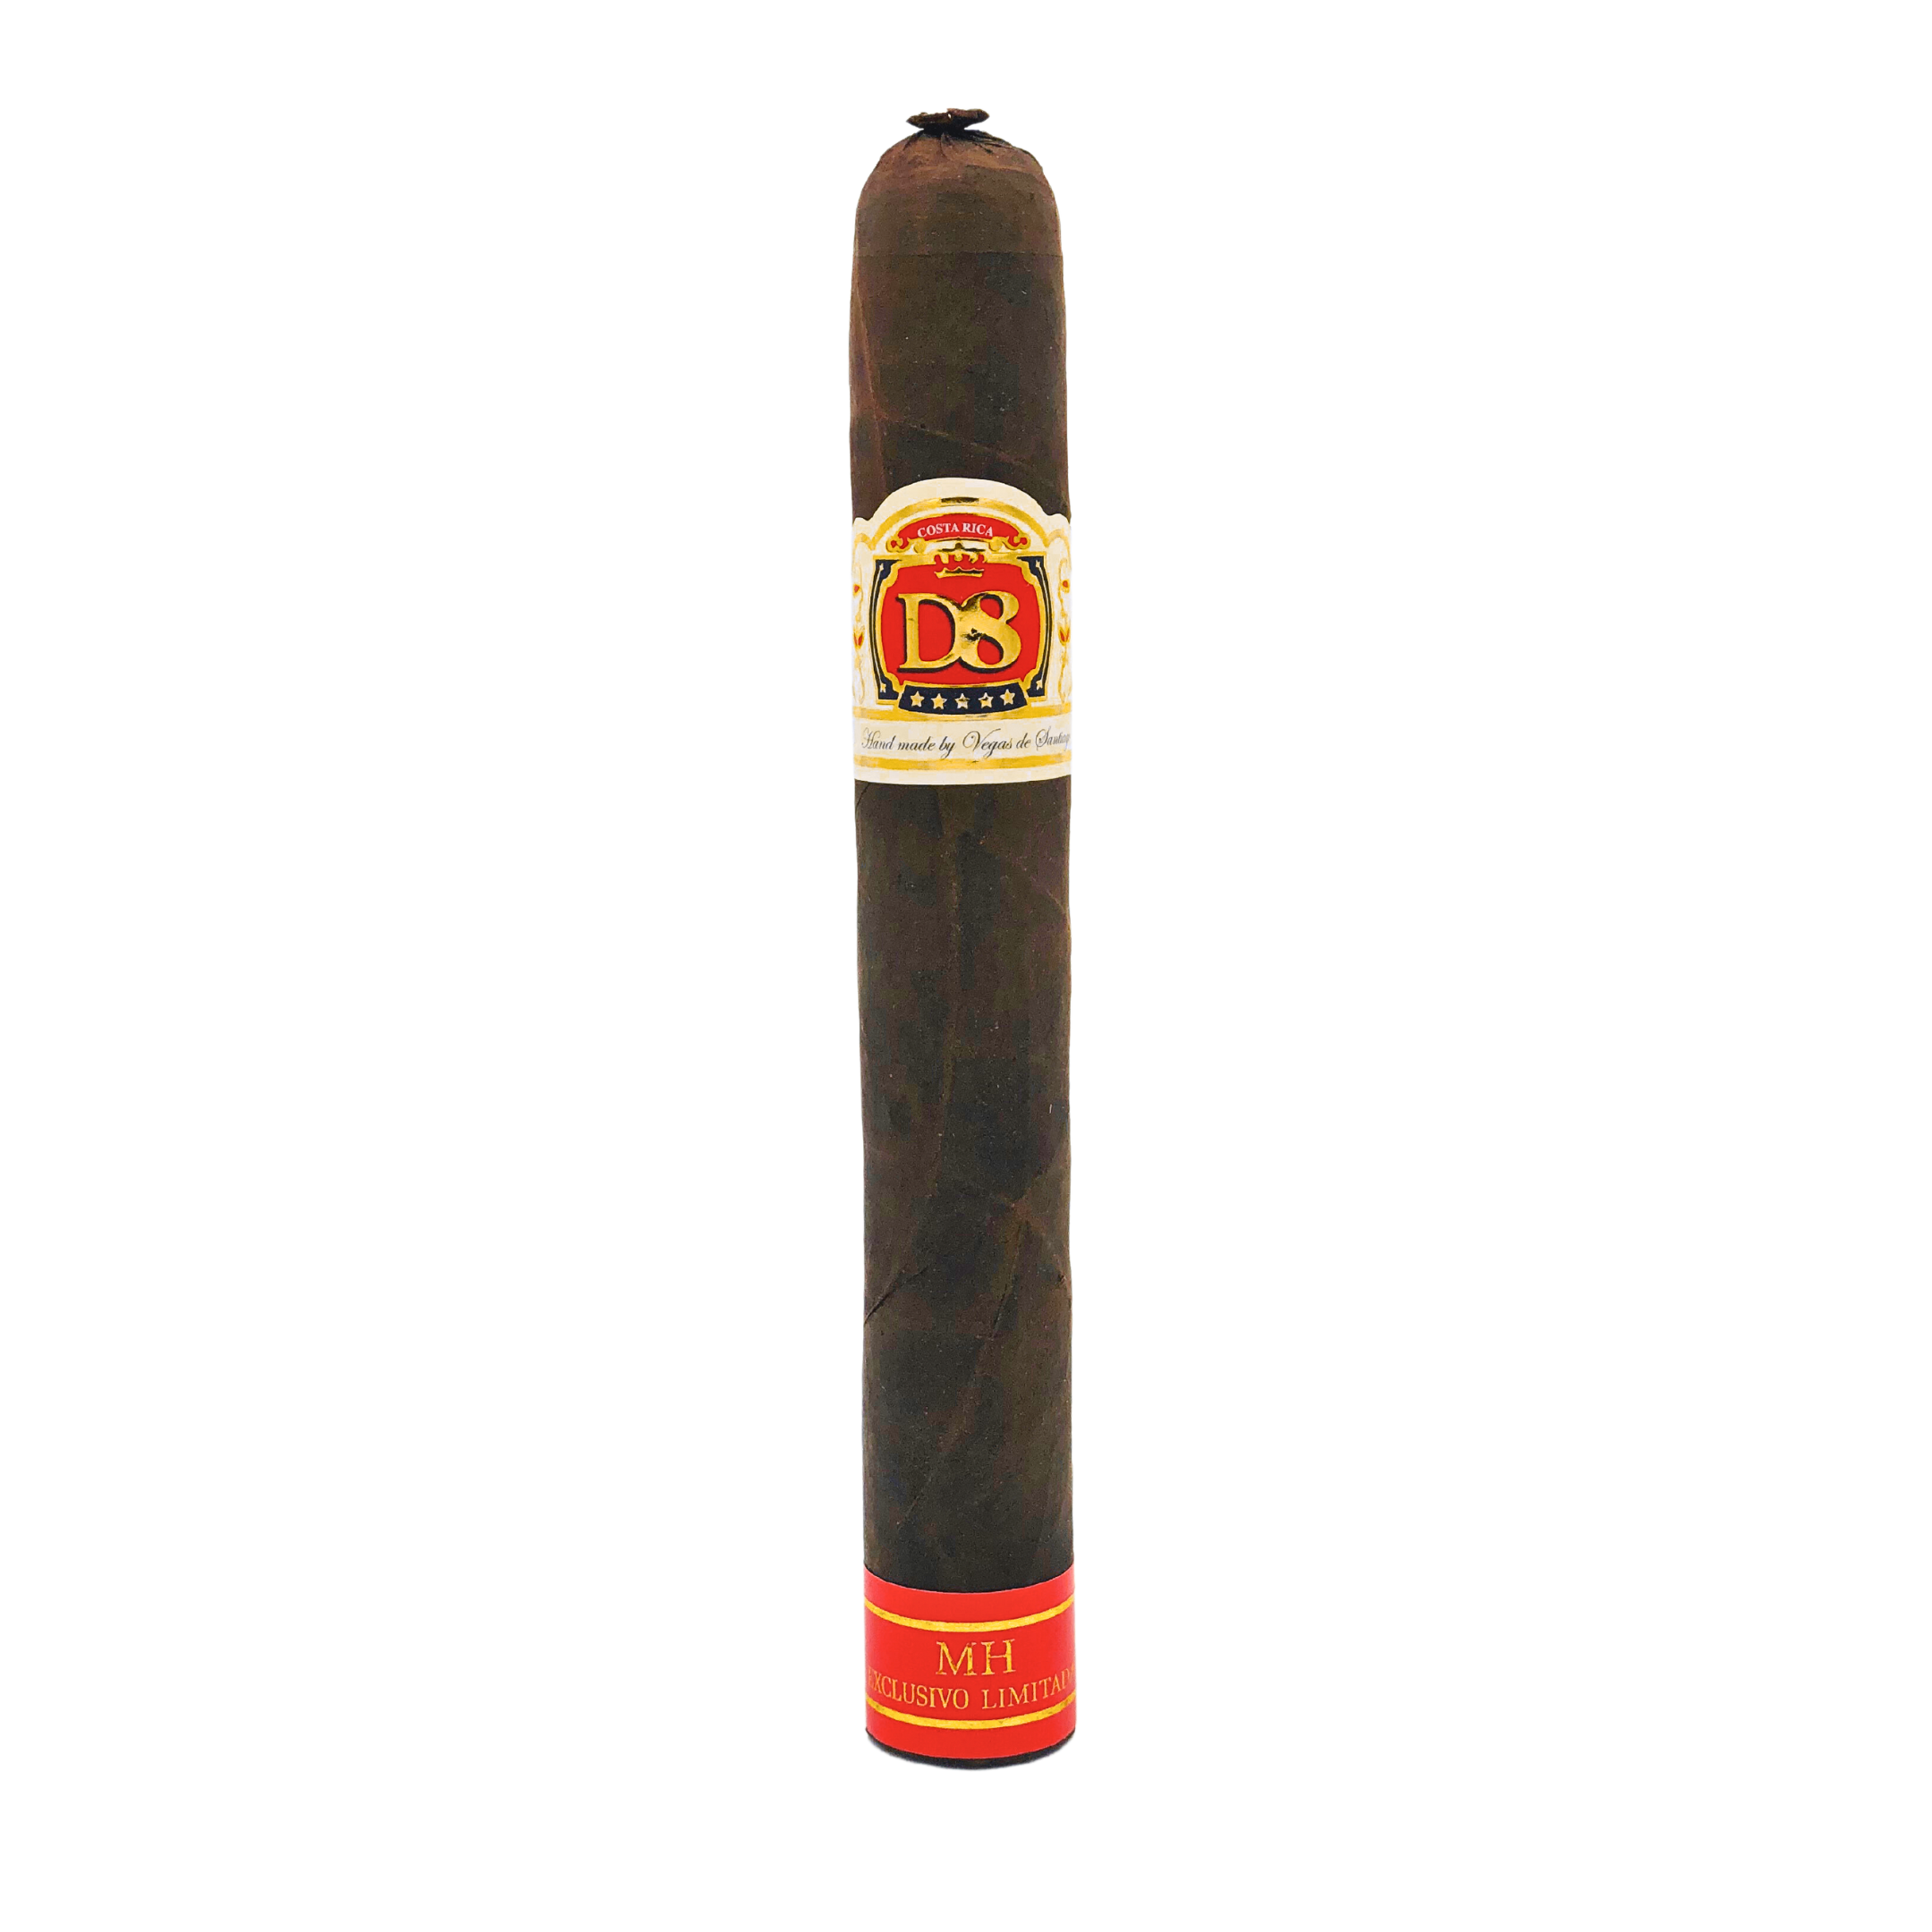 ZINO Nicaragua Robusto 4 Zigarren Online Kaufen, Für nur 30,00 €